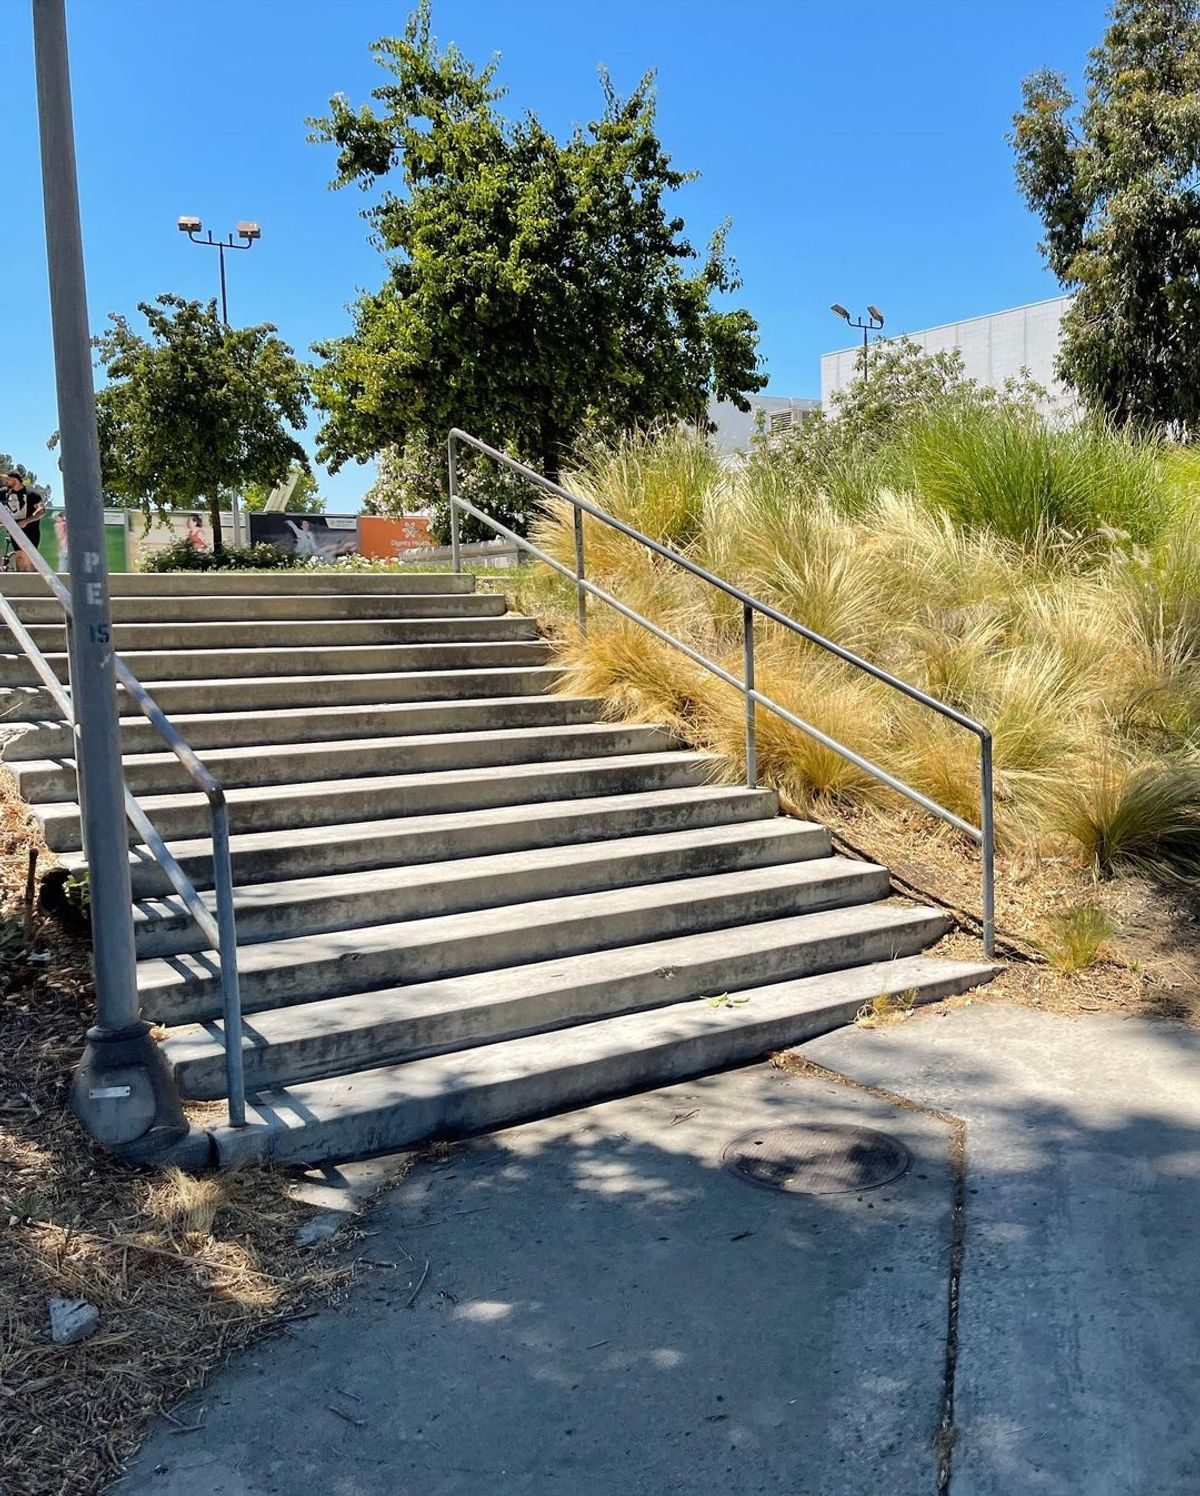 Image for skate spot CSU Northridge - 13 Stair Rail